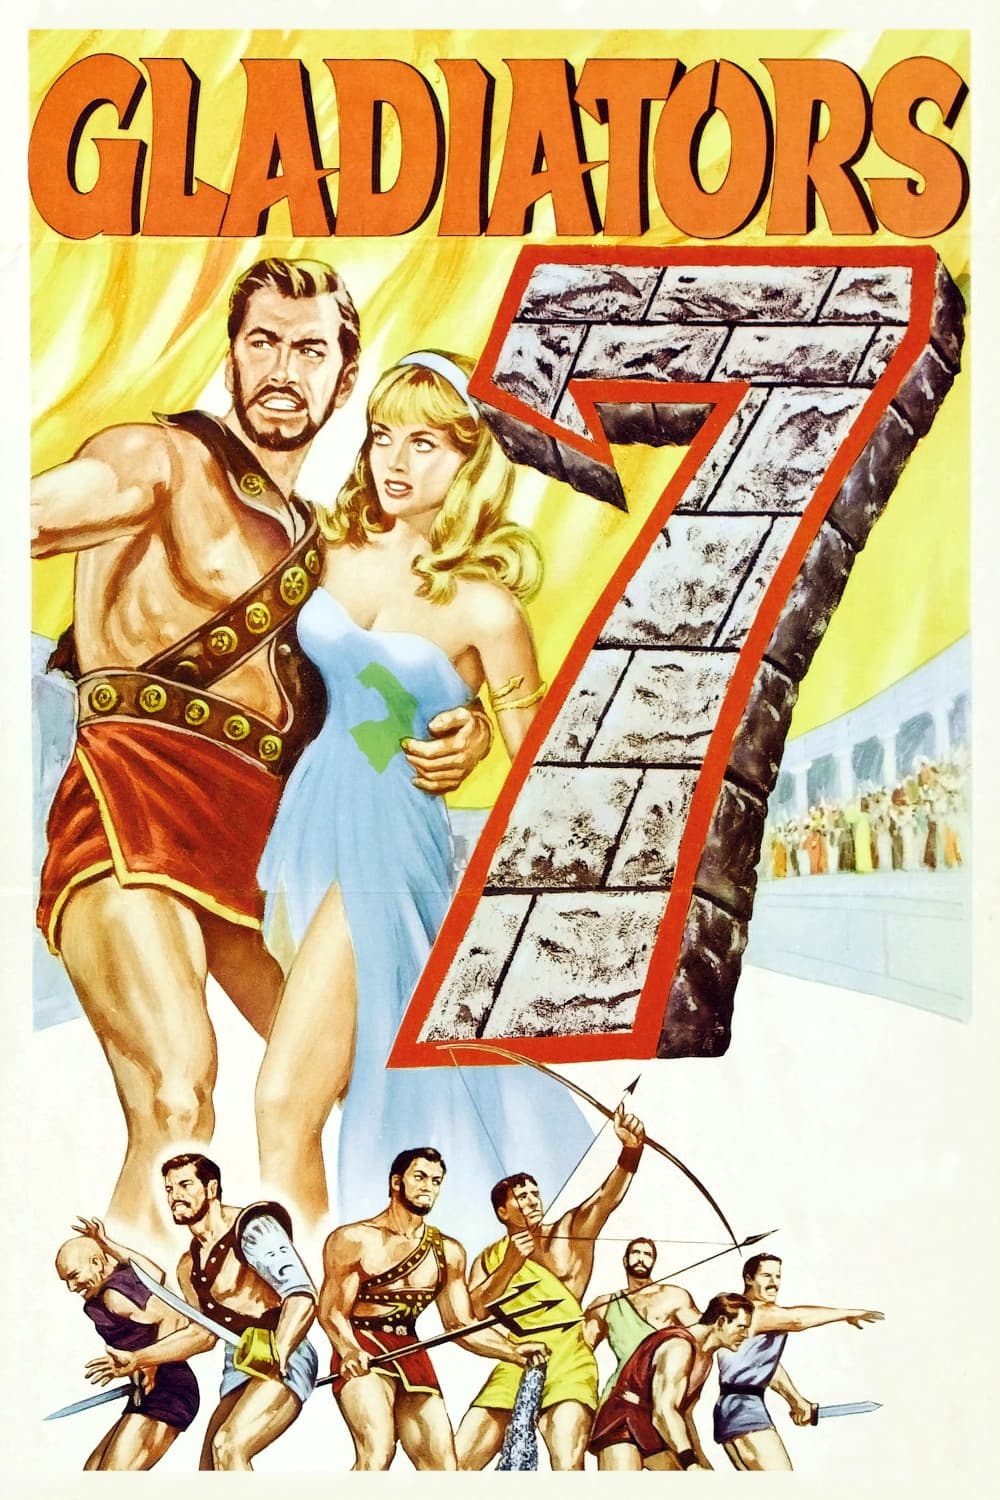 Gladiators 7 (1962)